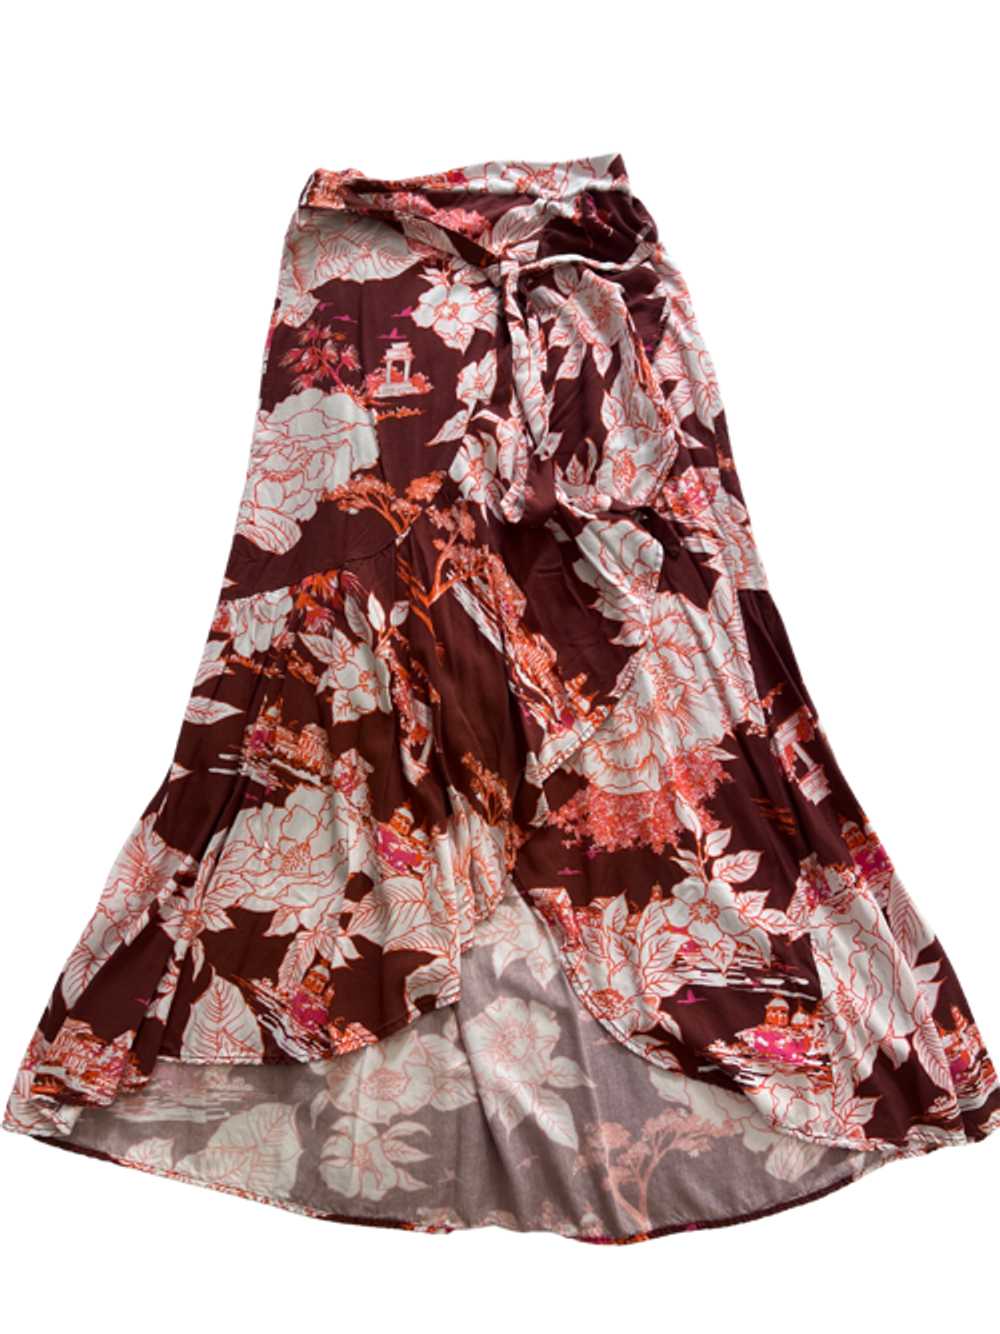 Maaji Maaji Long Skirt / Dress / Beach Coverup - image 1